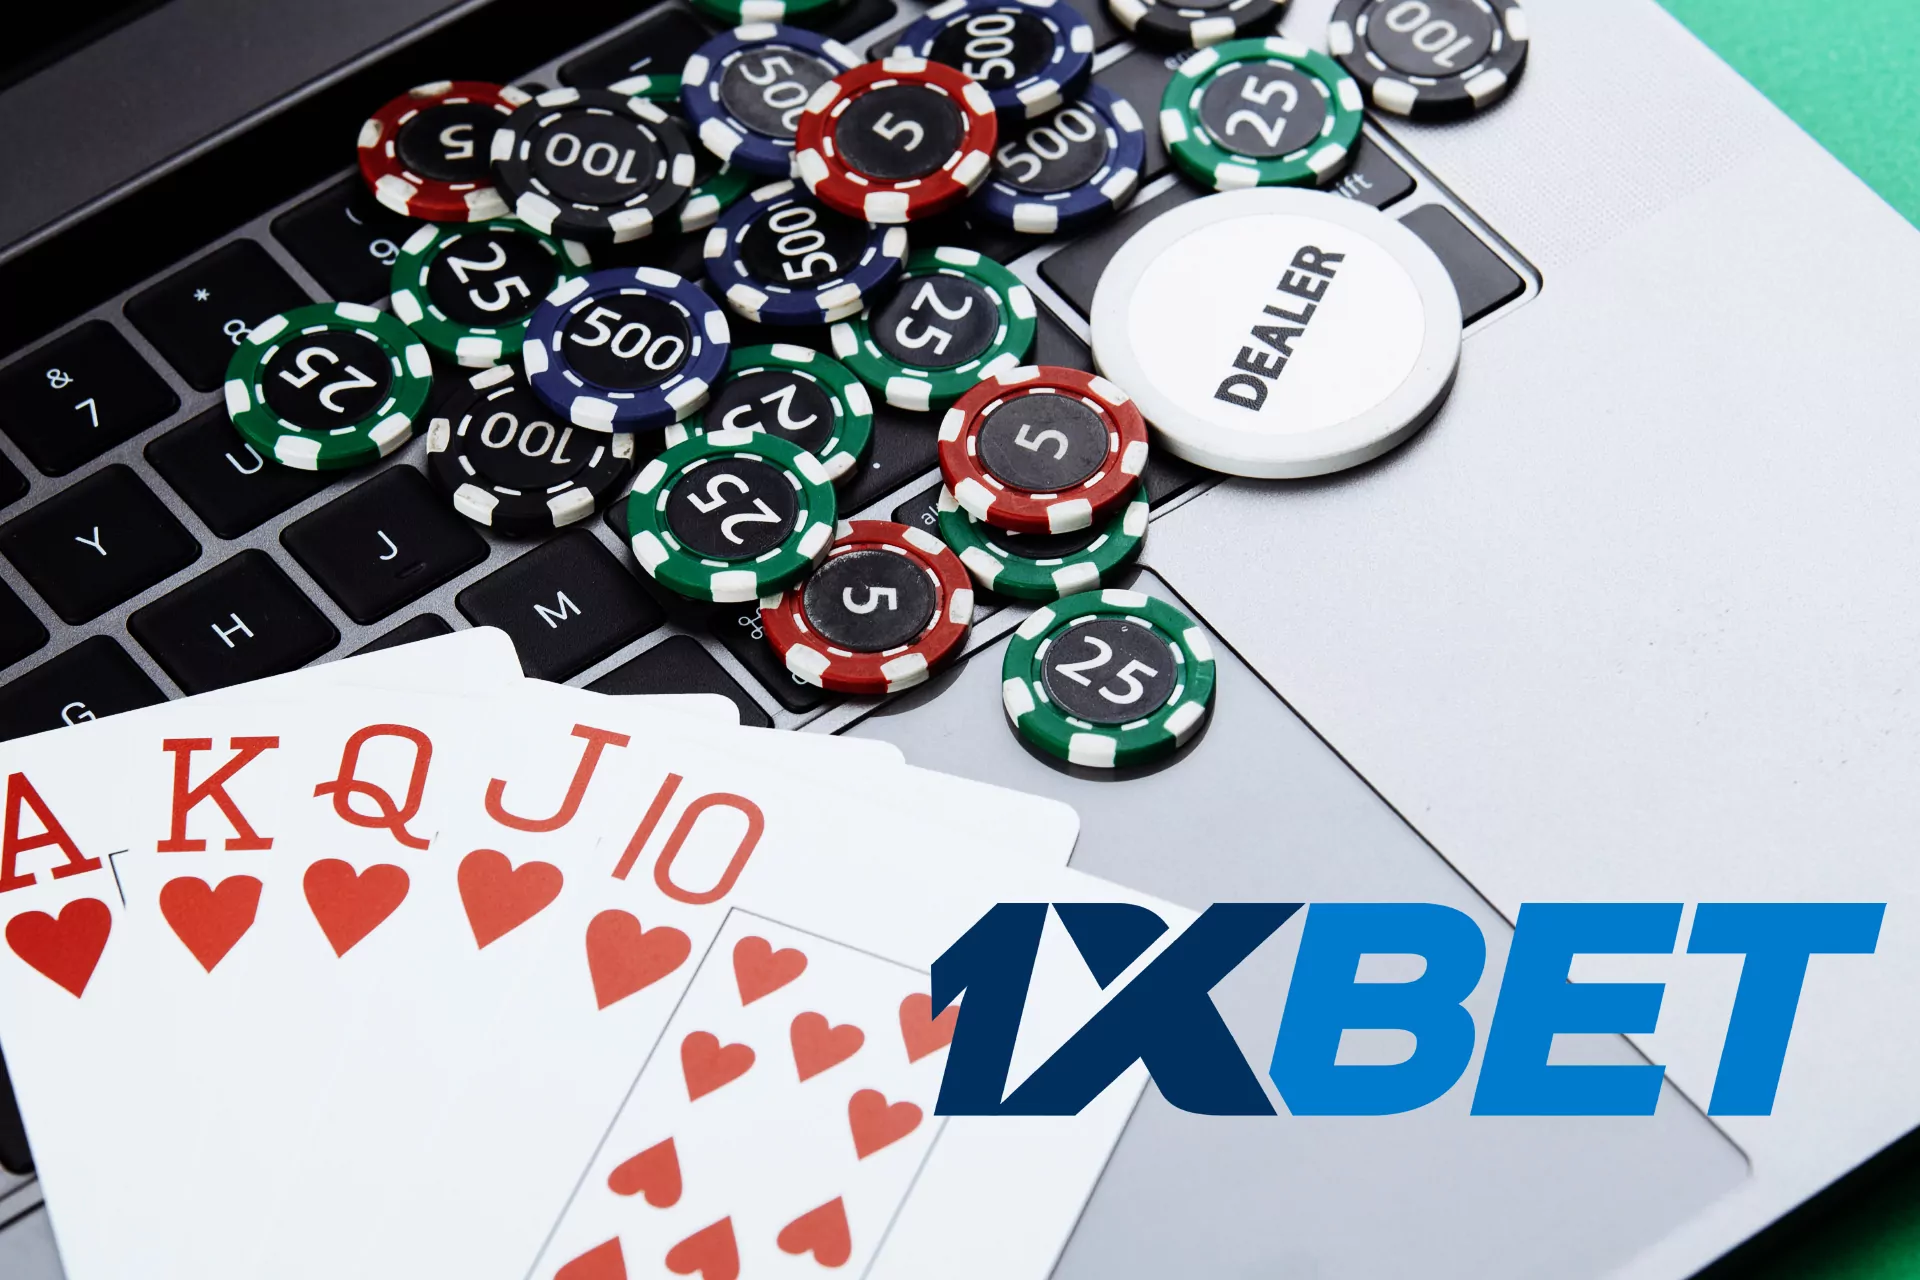 1xBet offers various poker bonuses.